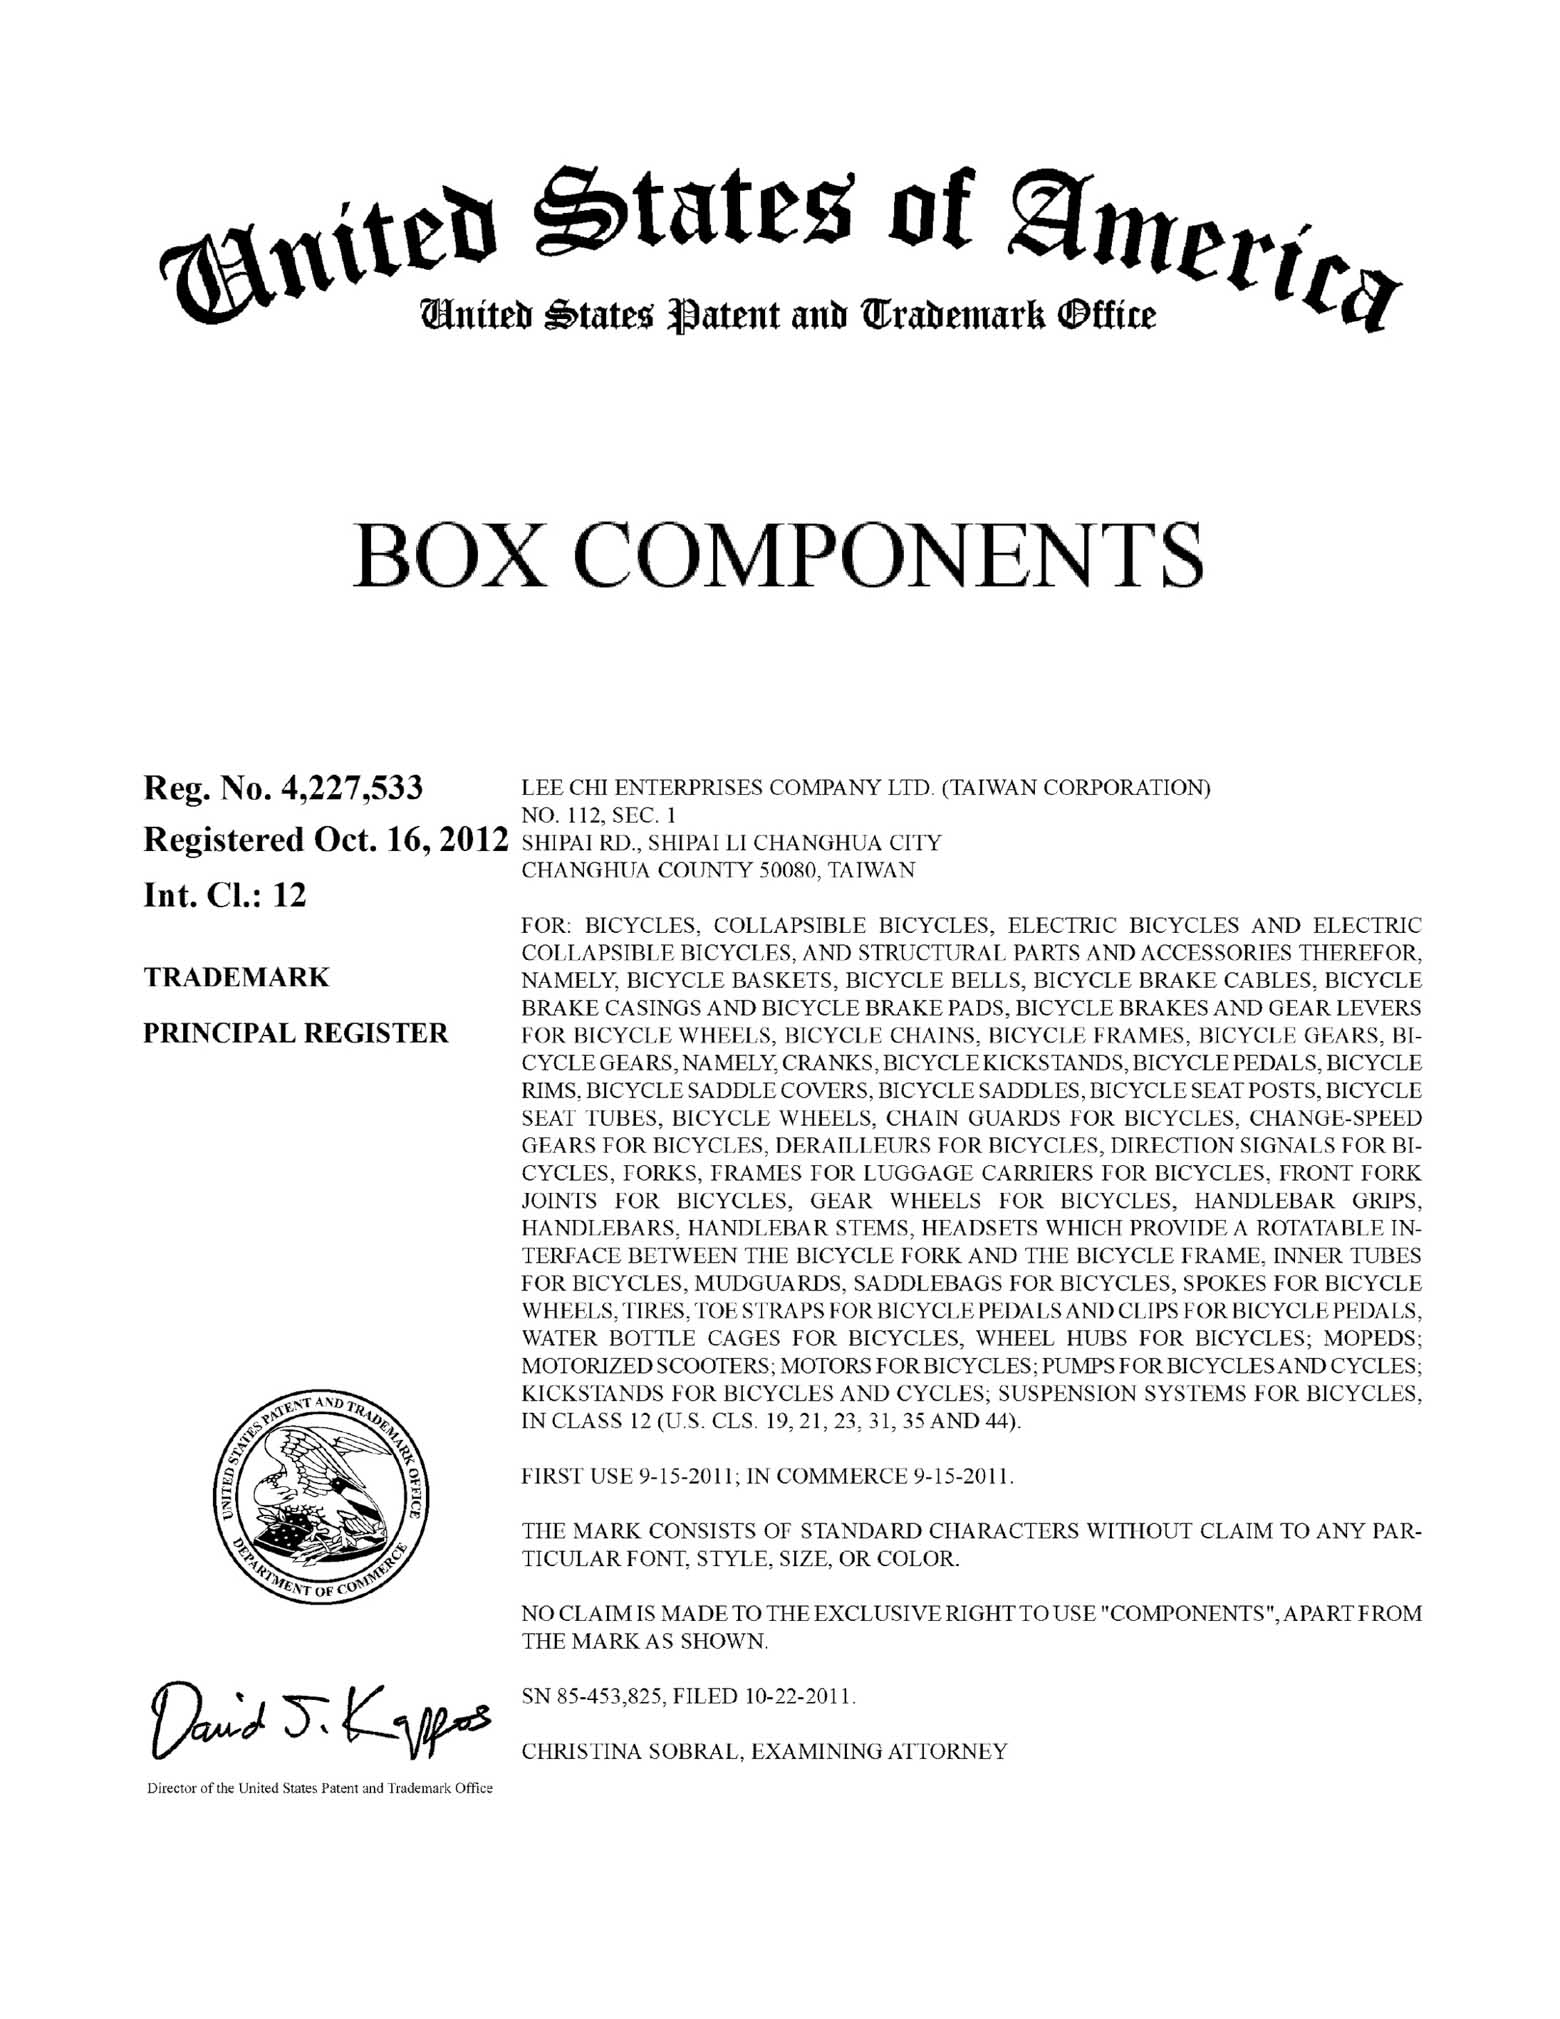 US Trademark 4,227,533 - Box Components main image